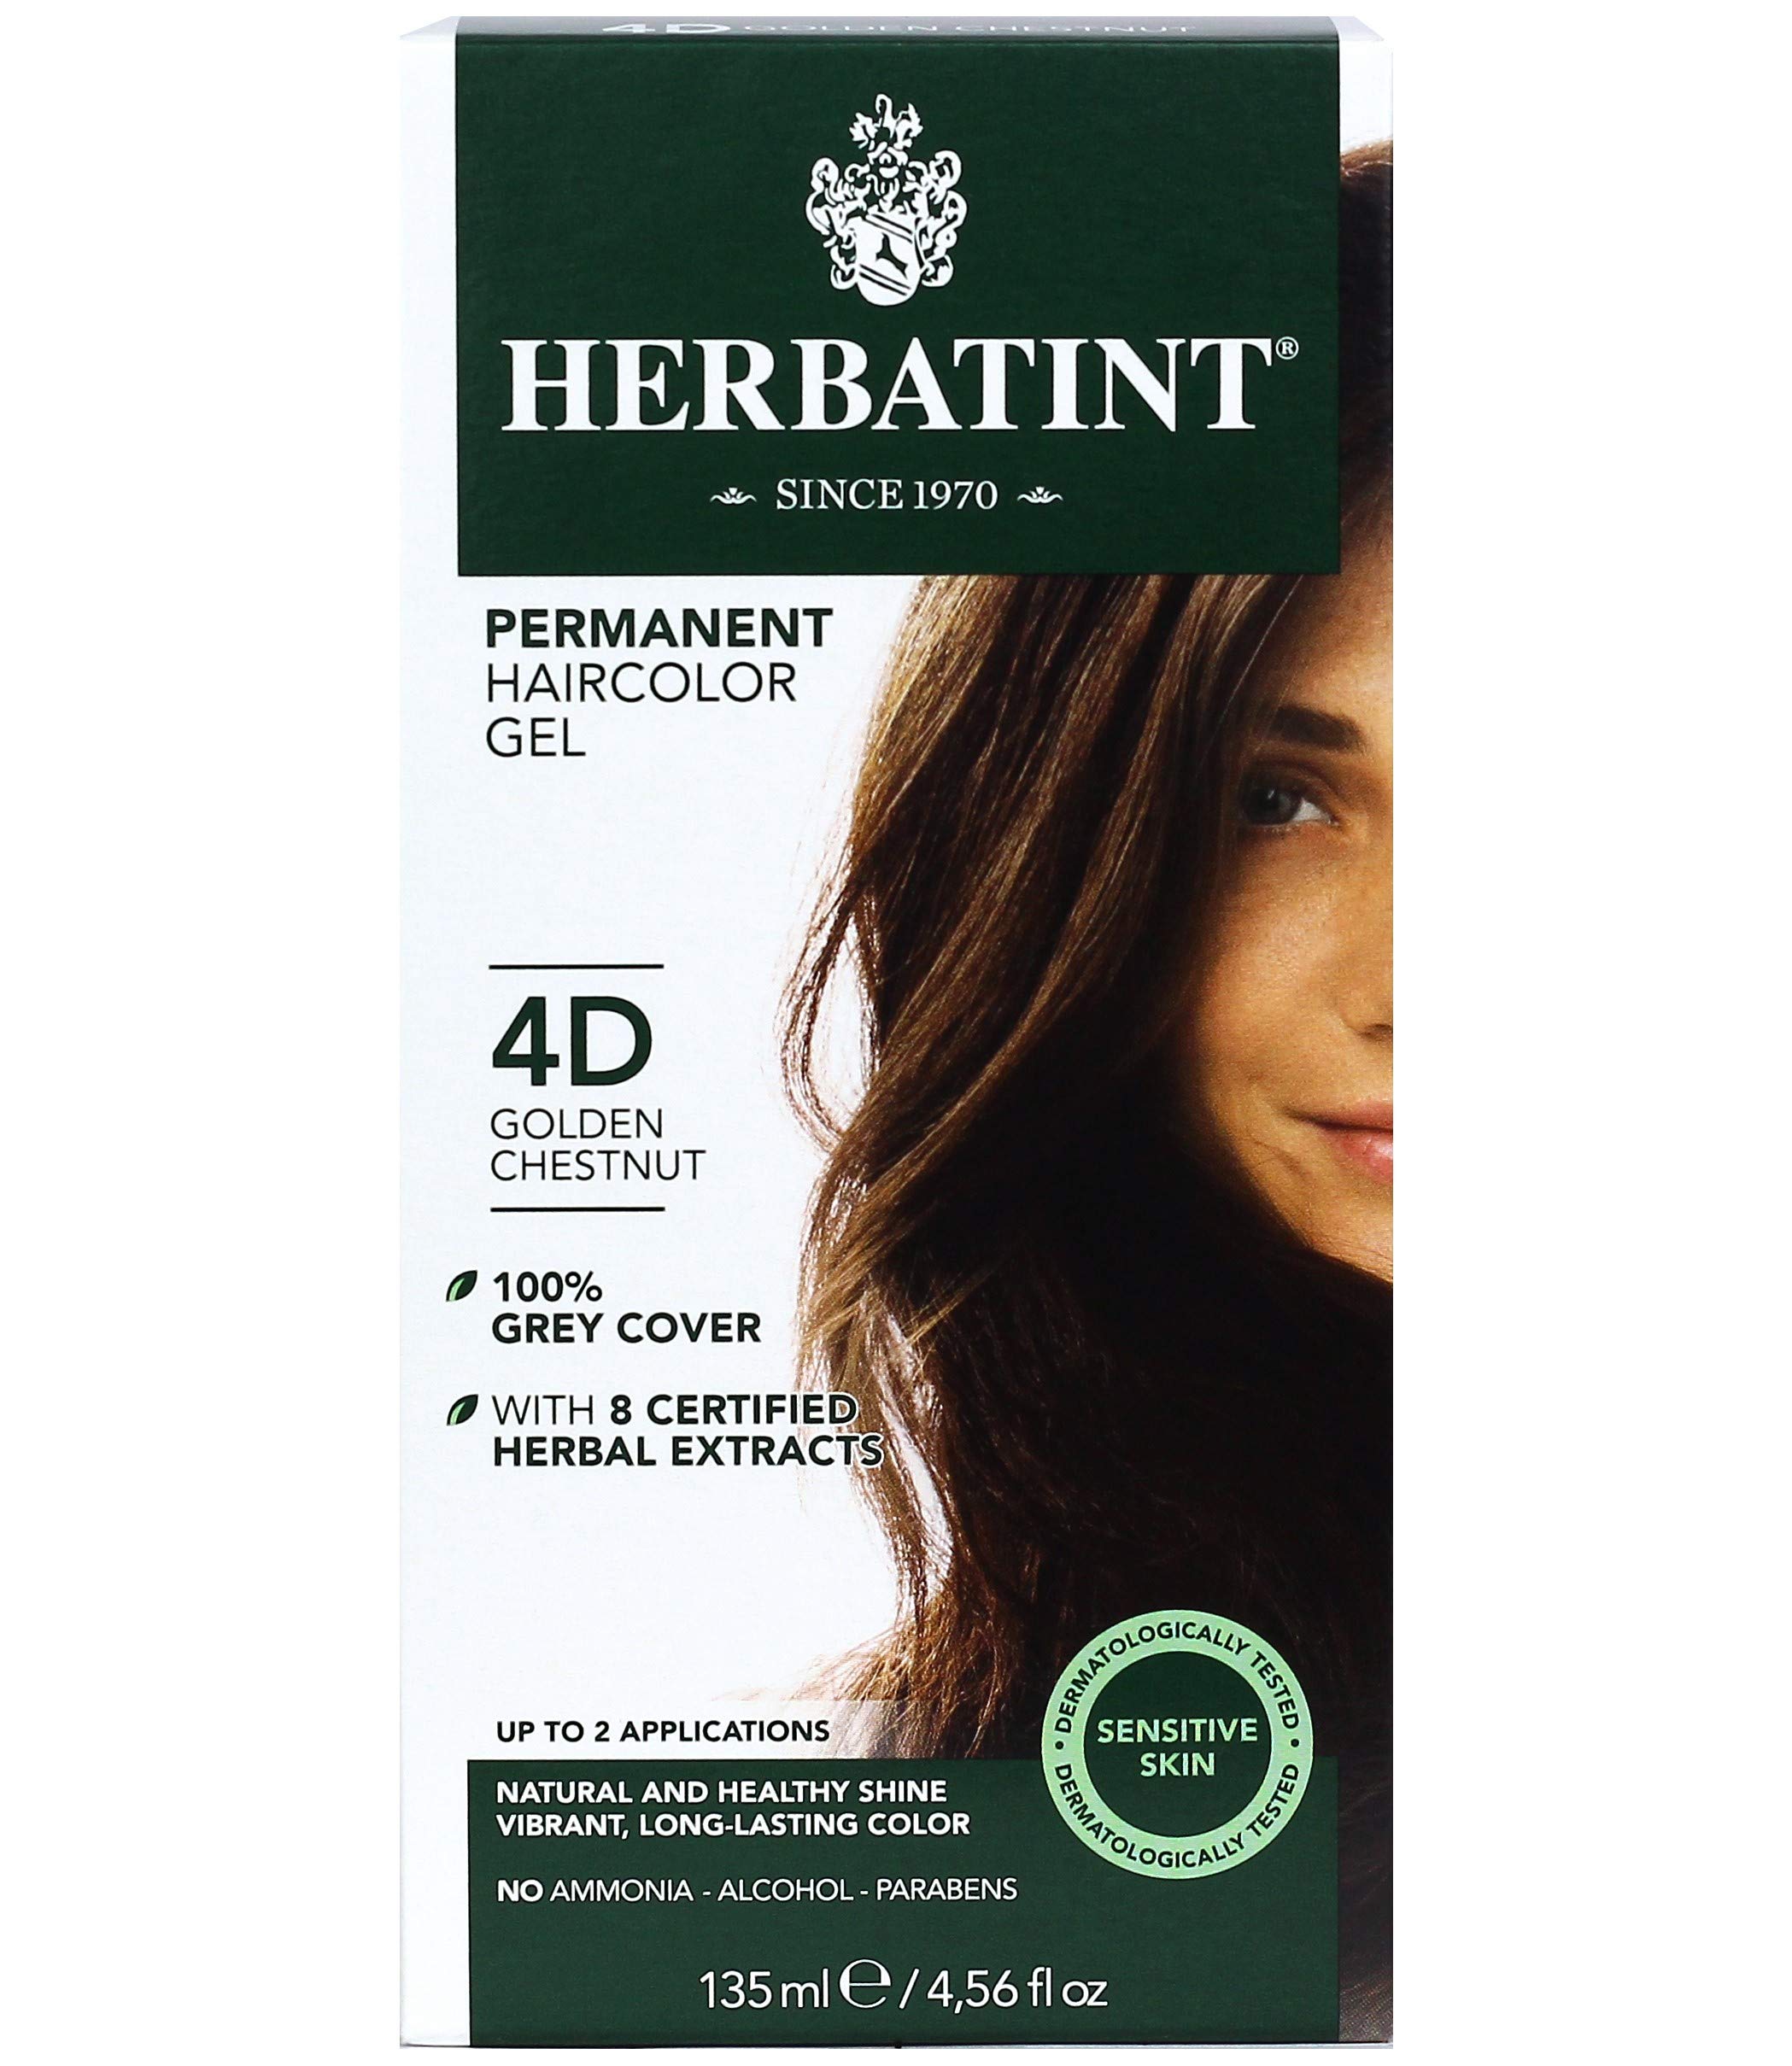 Herbatint Permanent Hair Color Gel, 4d Golden Chestnut, 4 Oz (095216)